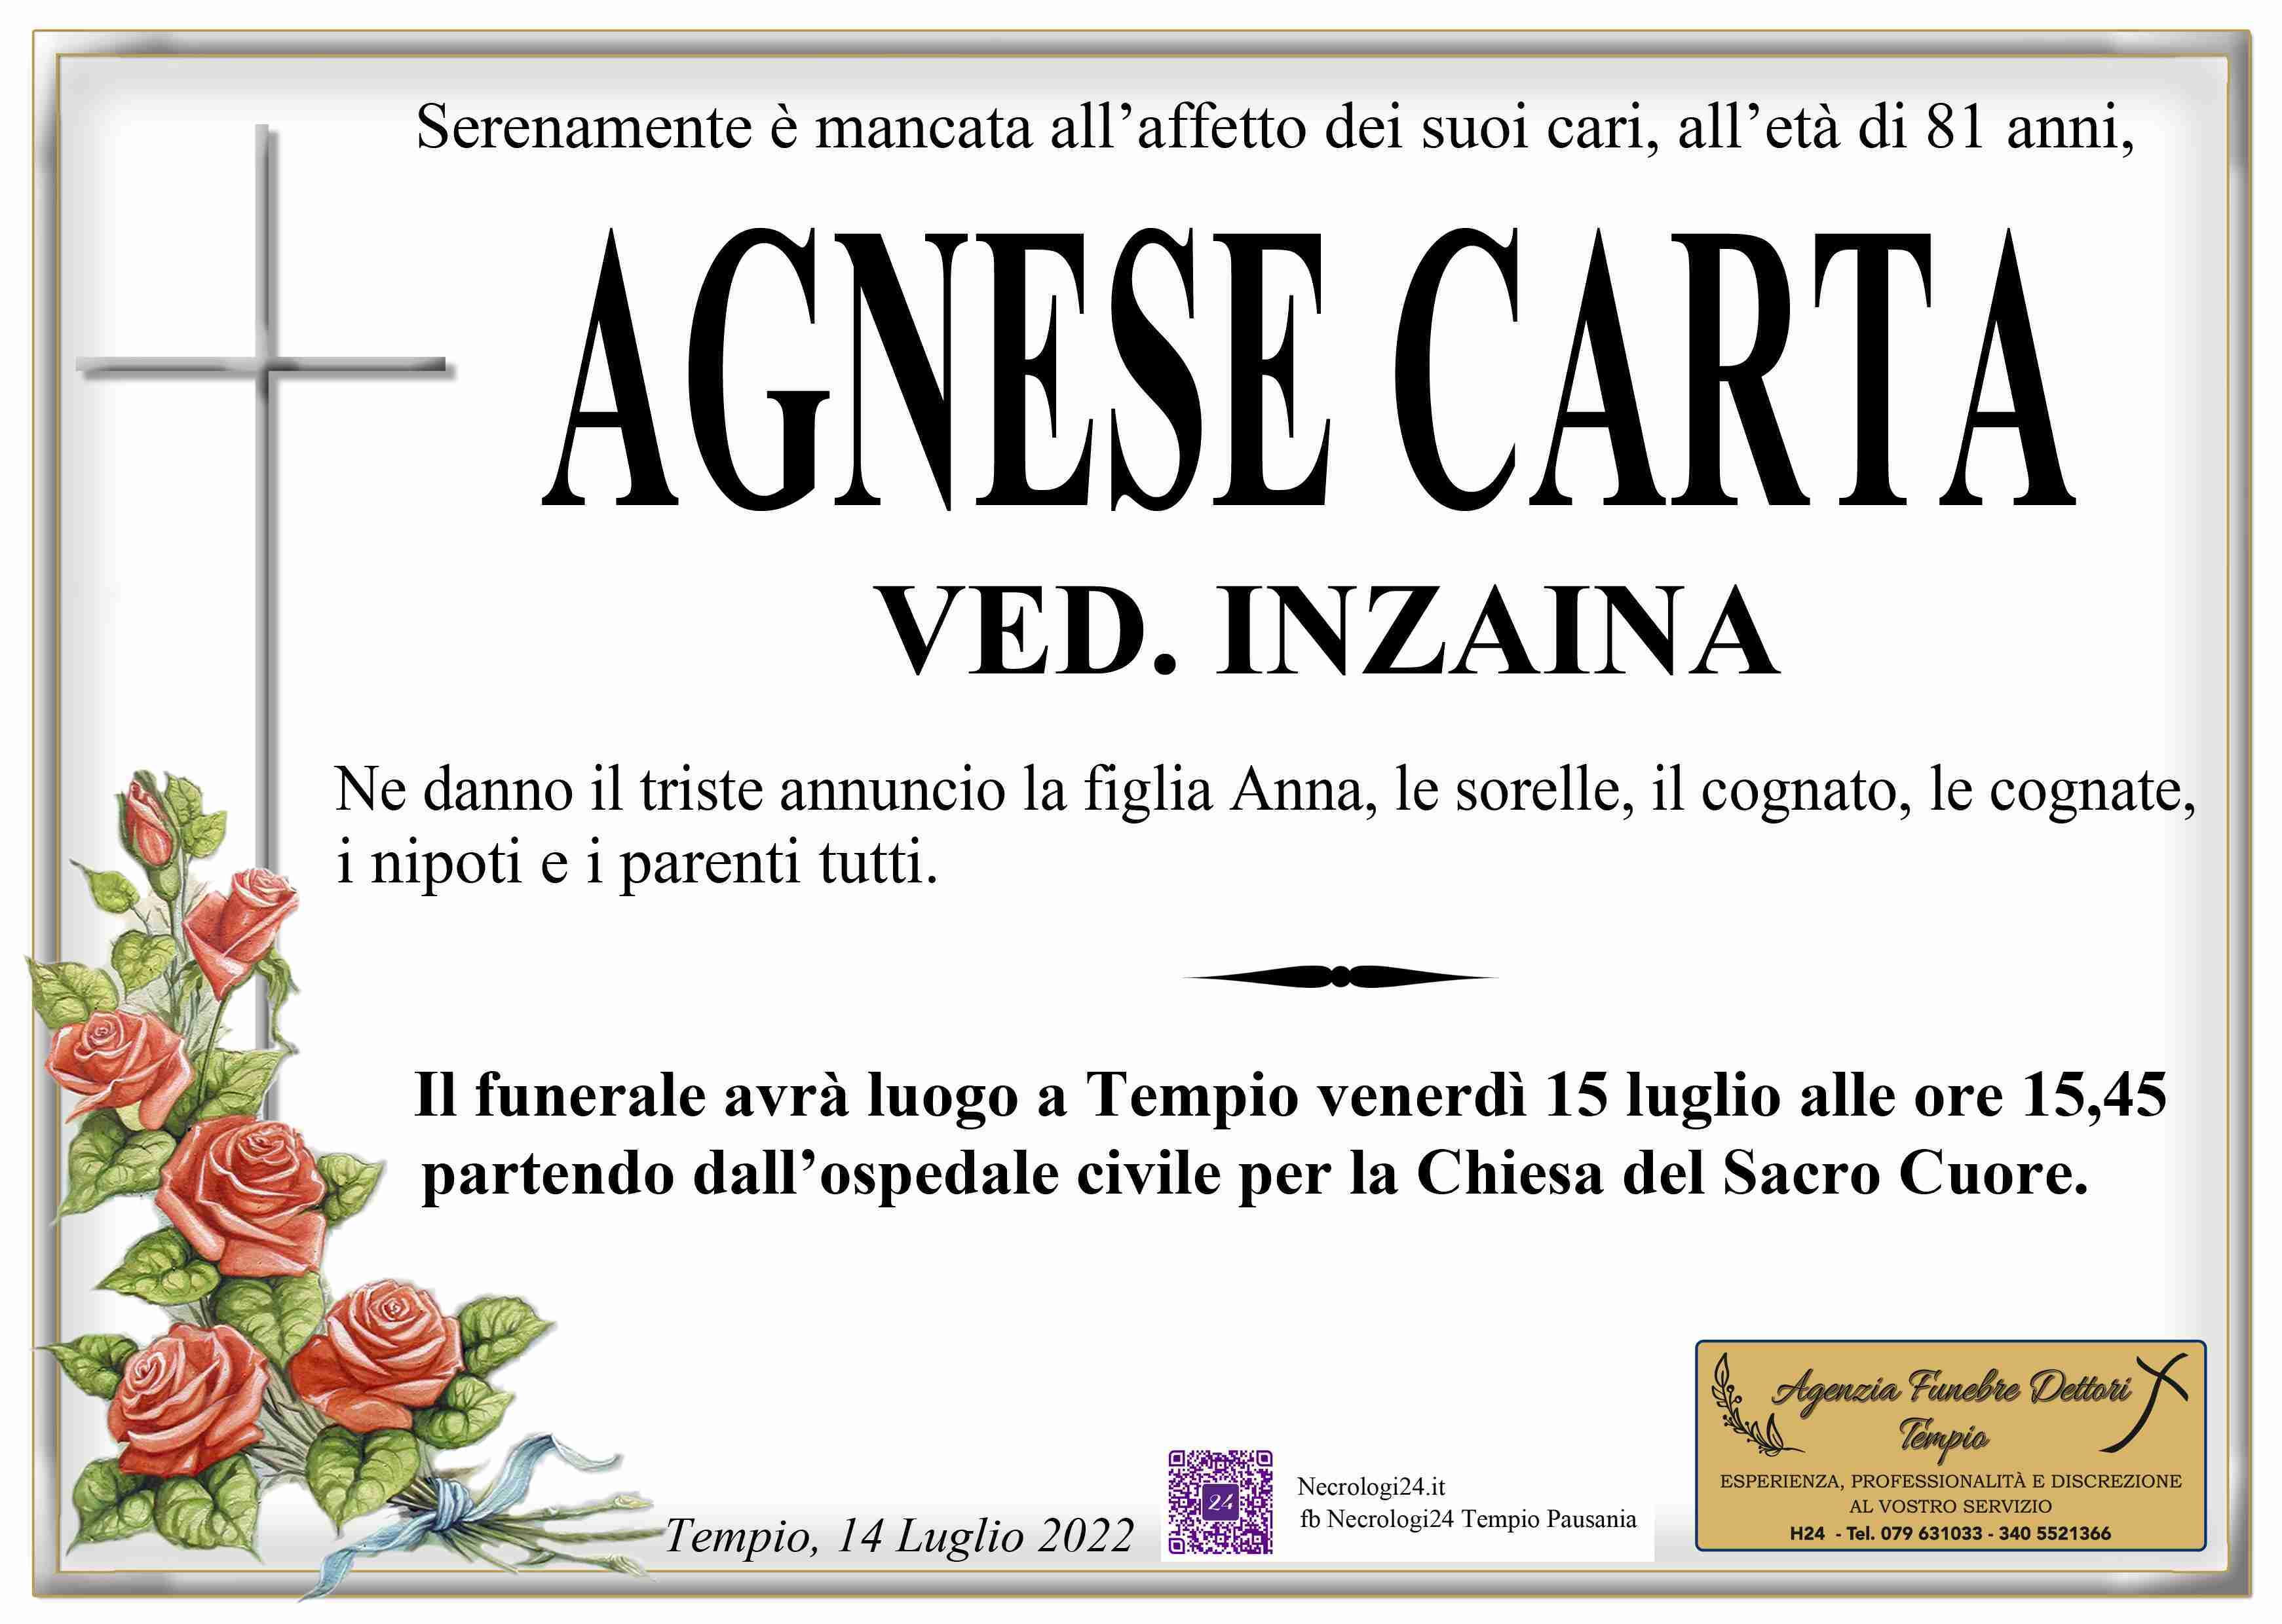 Agnese Carta